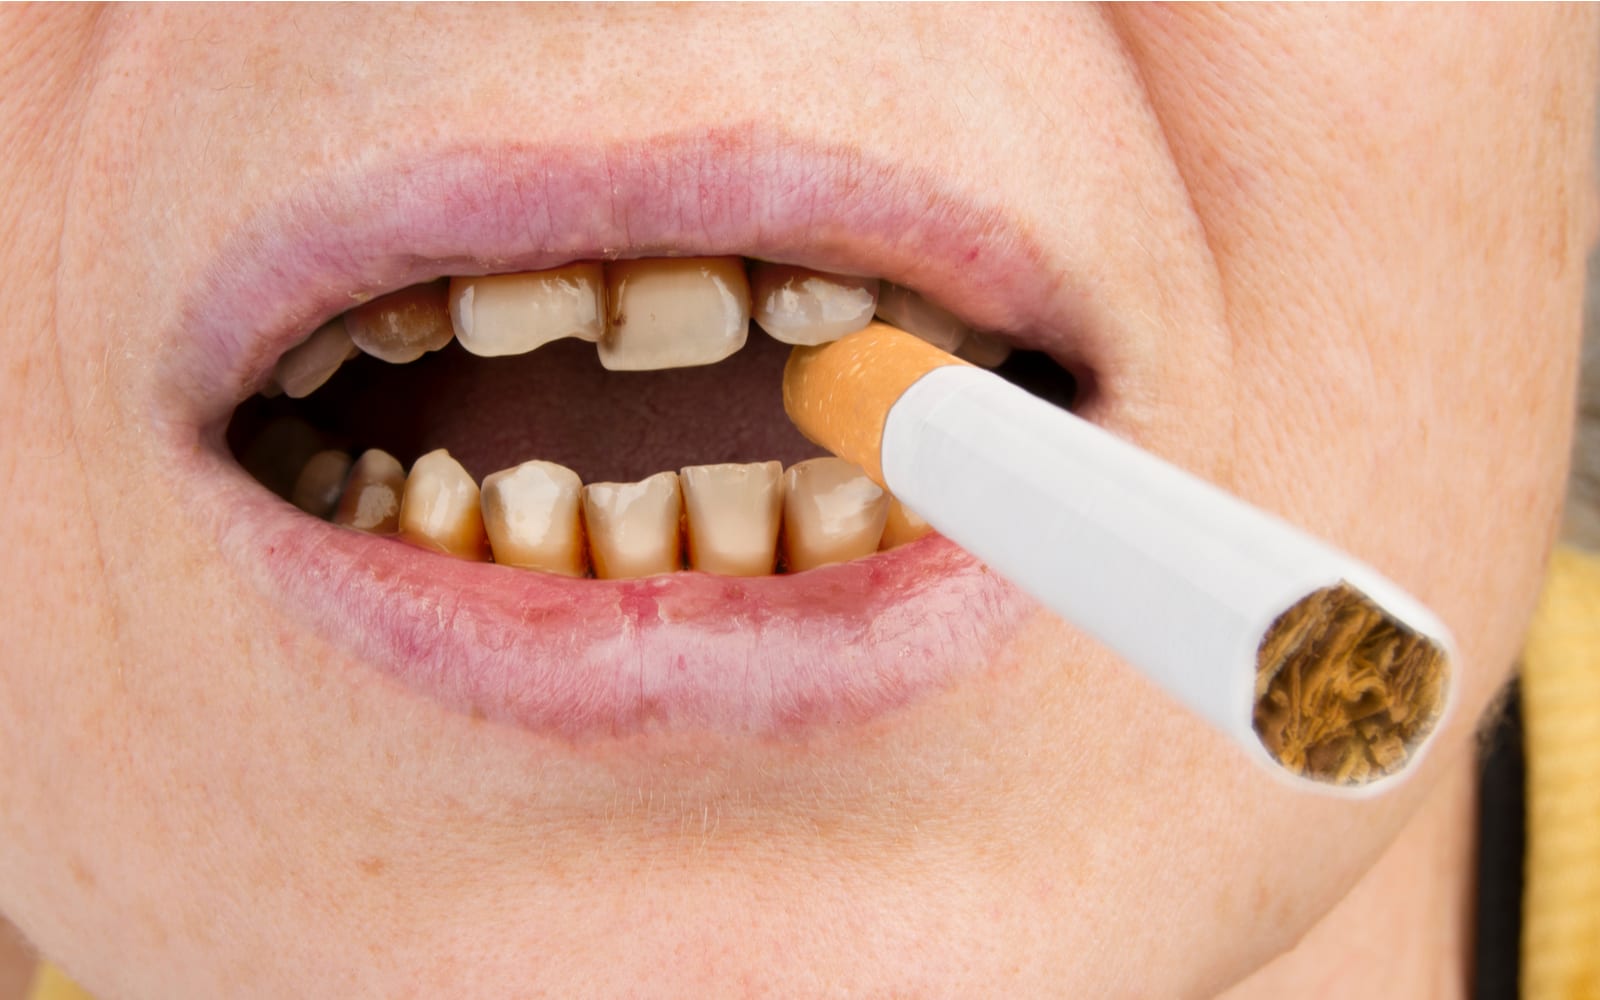 Teeth damaged by smoking